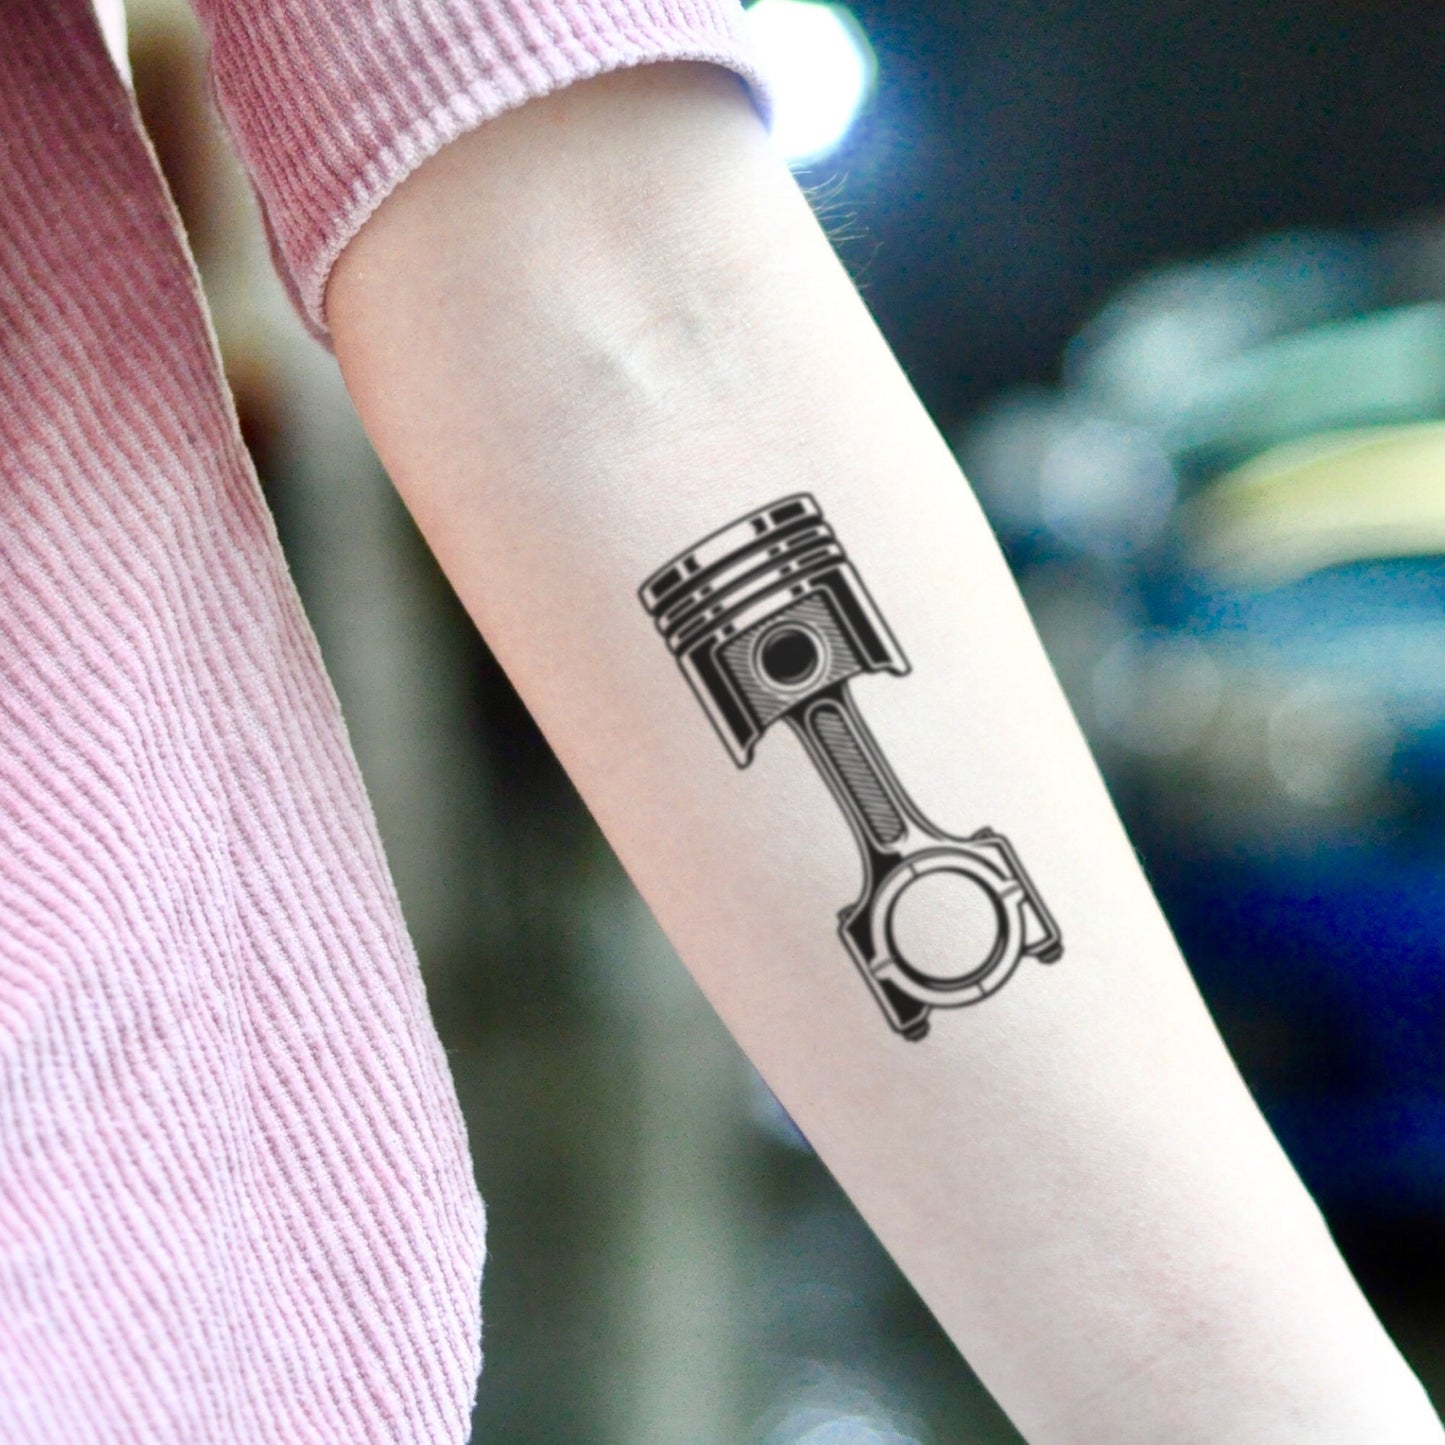 fake small piston engine plug plumbing pop punk illustrative temporary tattoo sticker design idea on inner arm